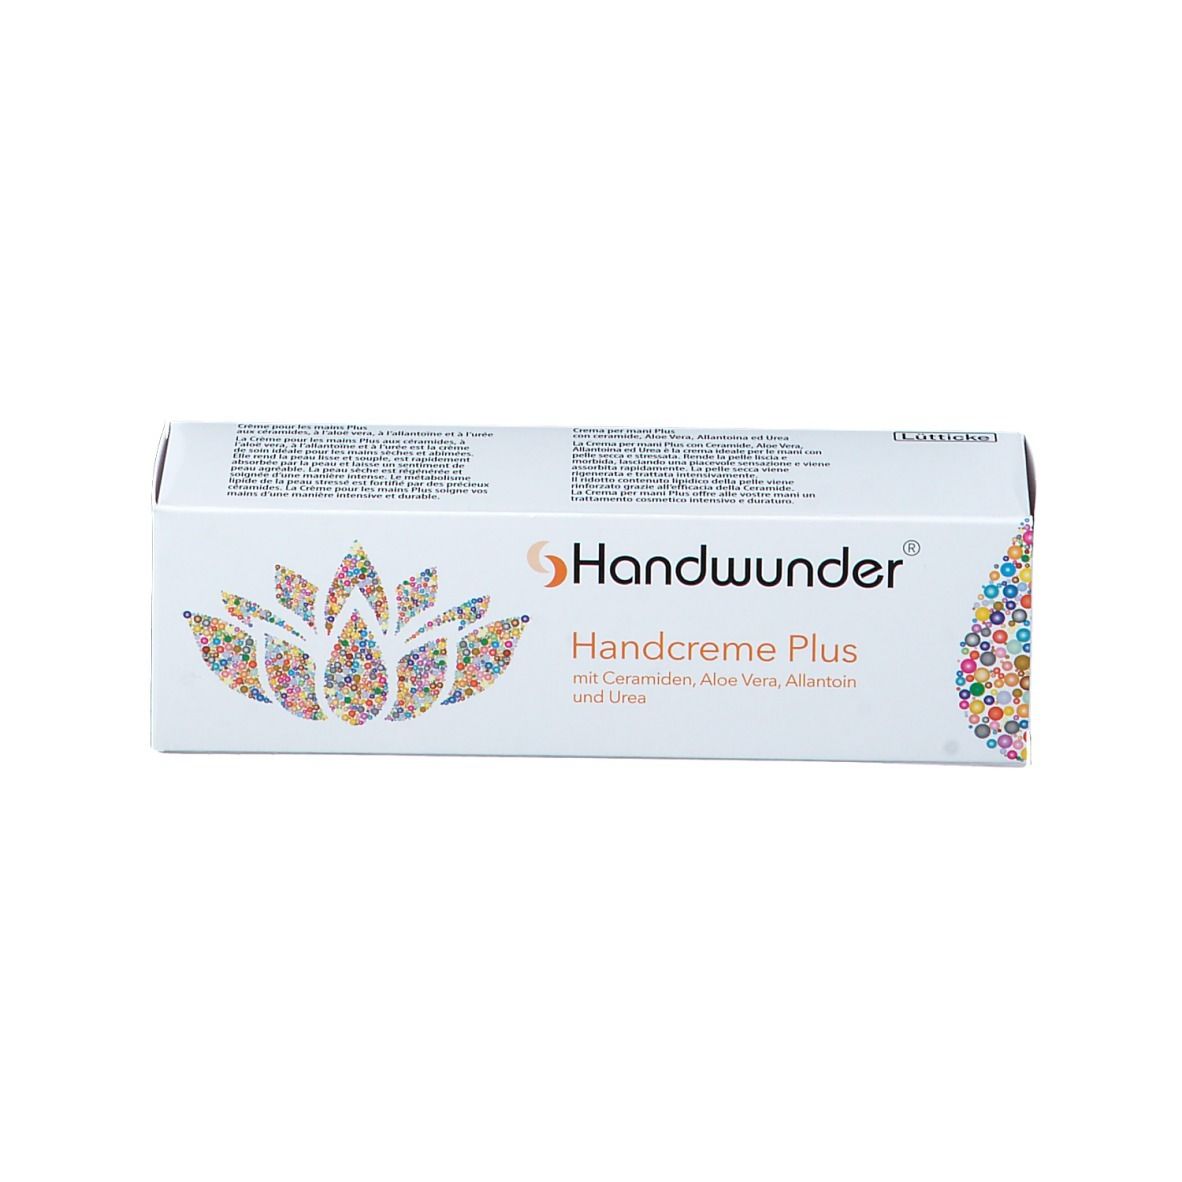 Handwunder® Handcreme Plus